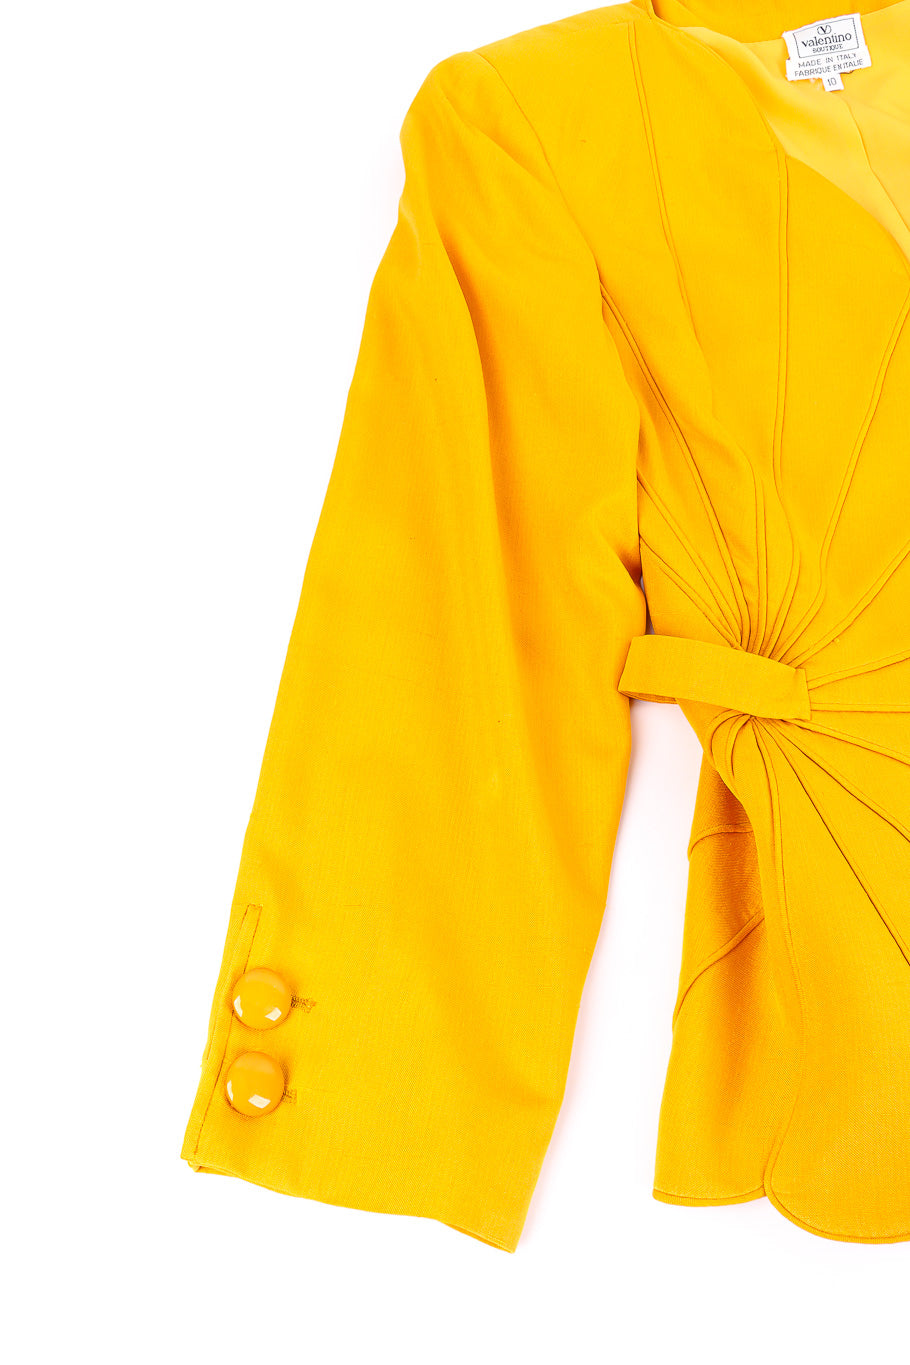 Valentino Boutique shell pattern jacket and skirt set sleeve details @recessla